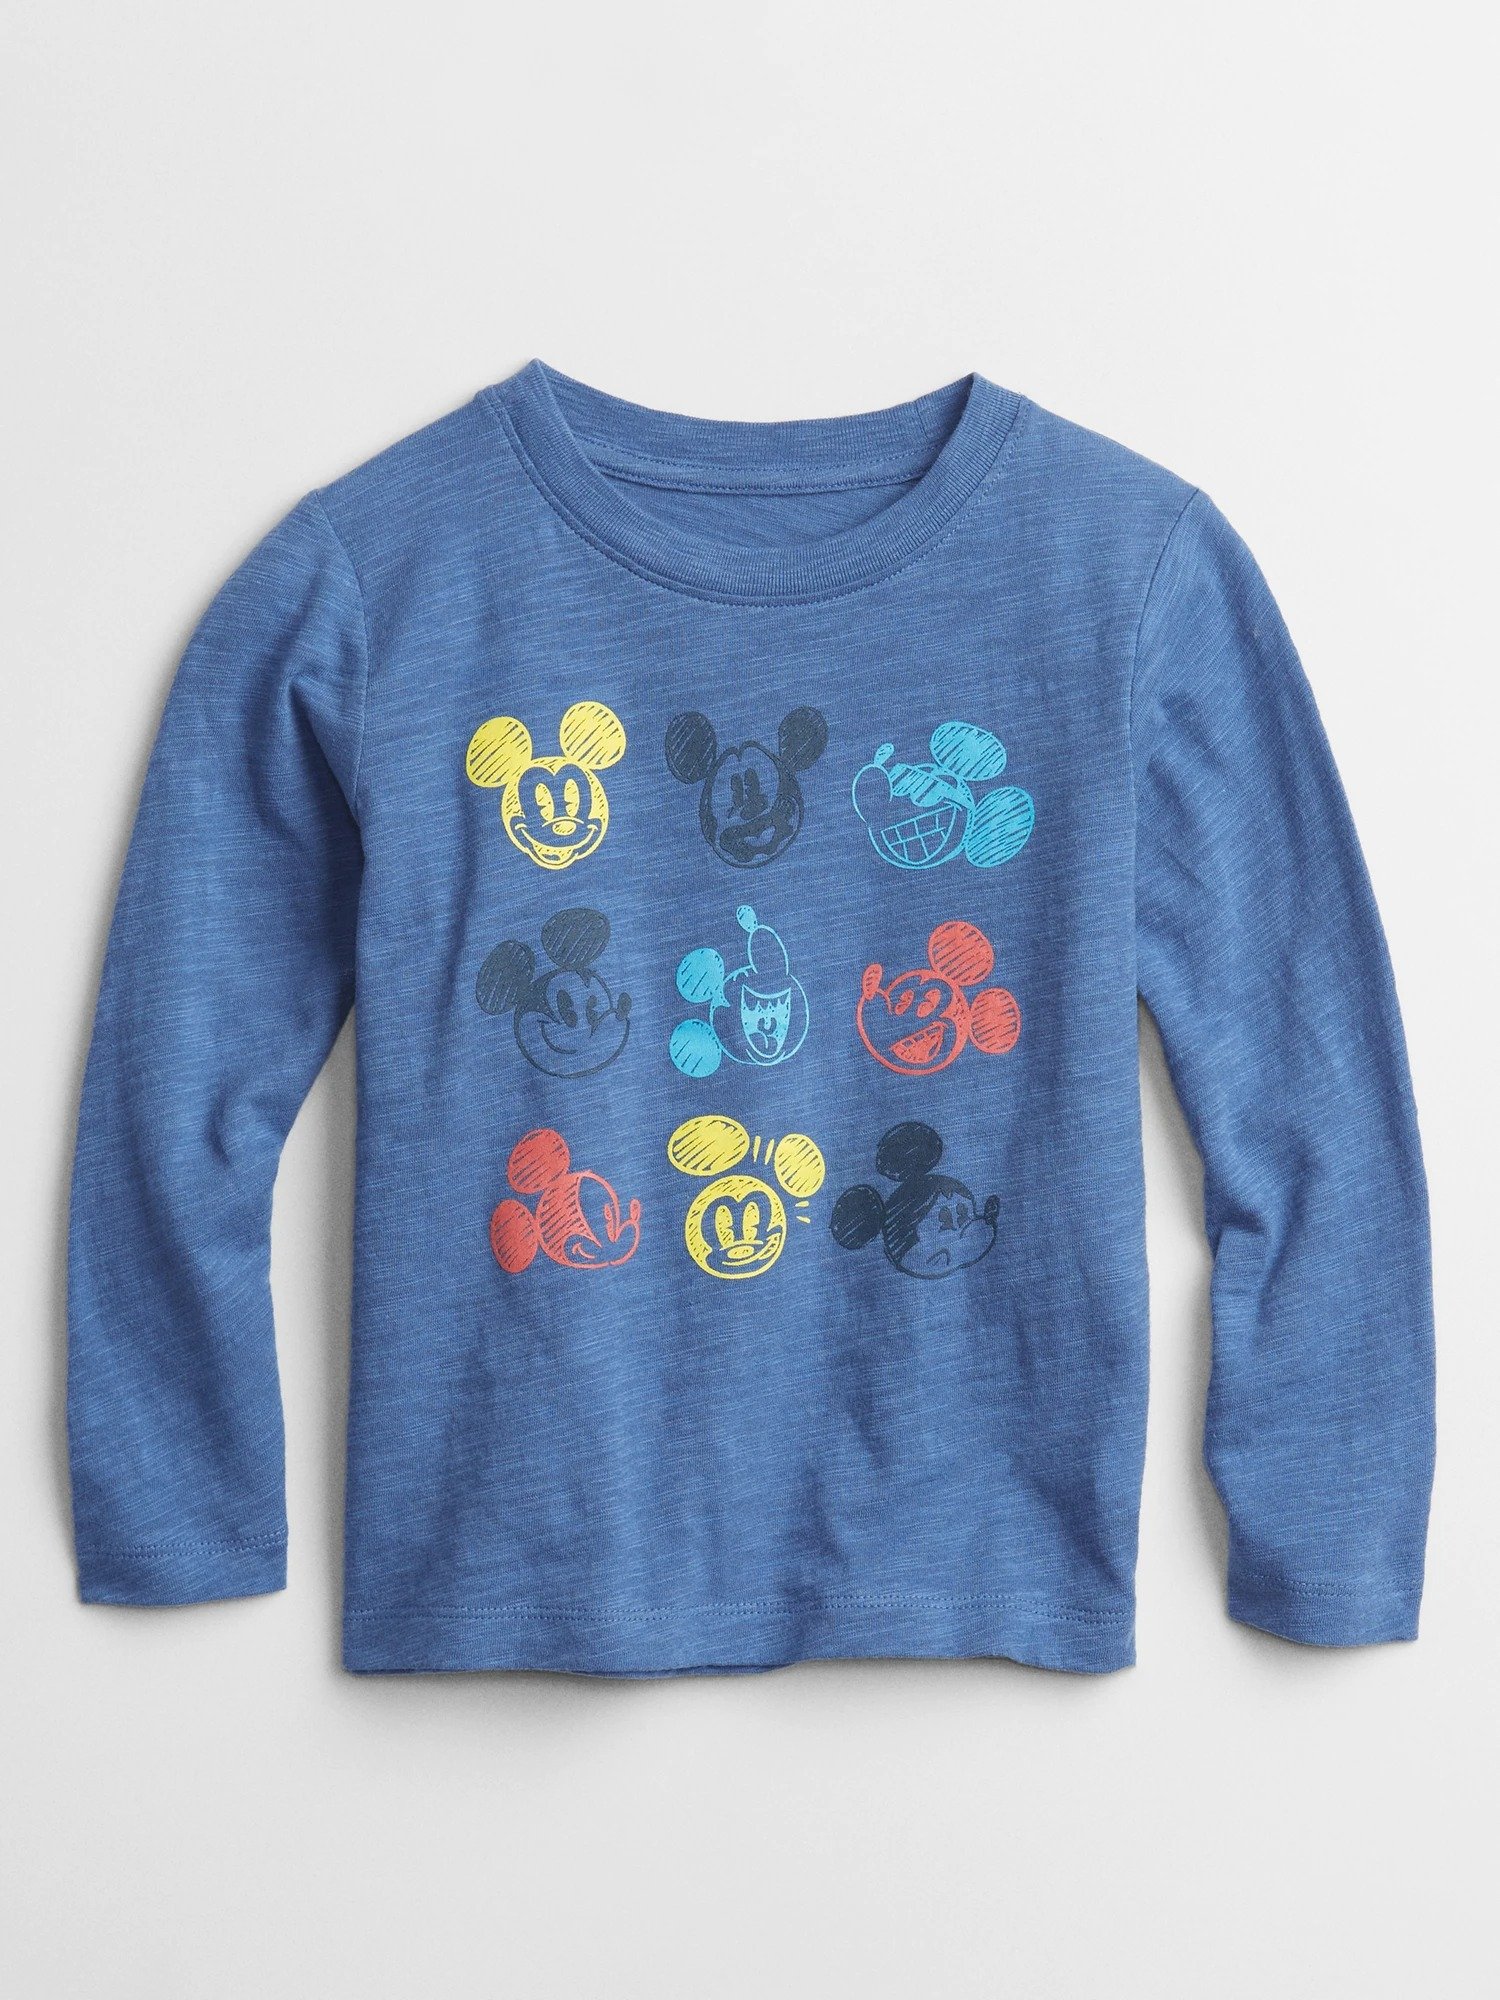 Disney Mickey Mouse Grafik Baskılı T-Shirt product image